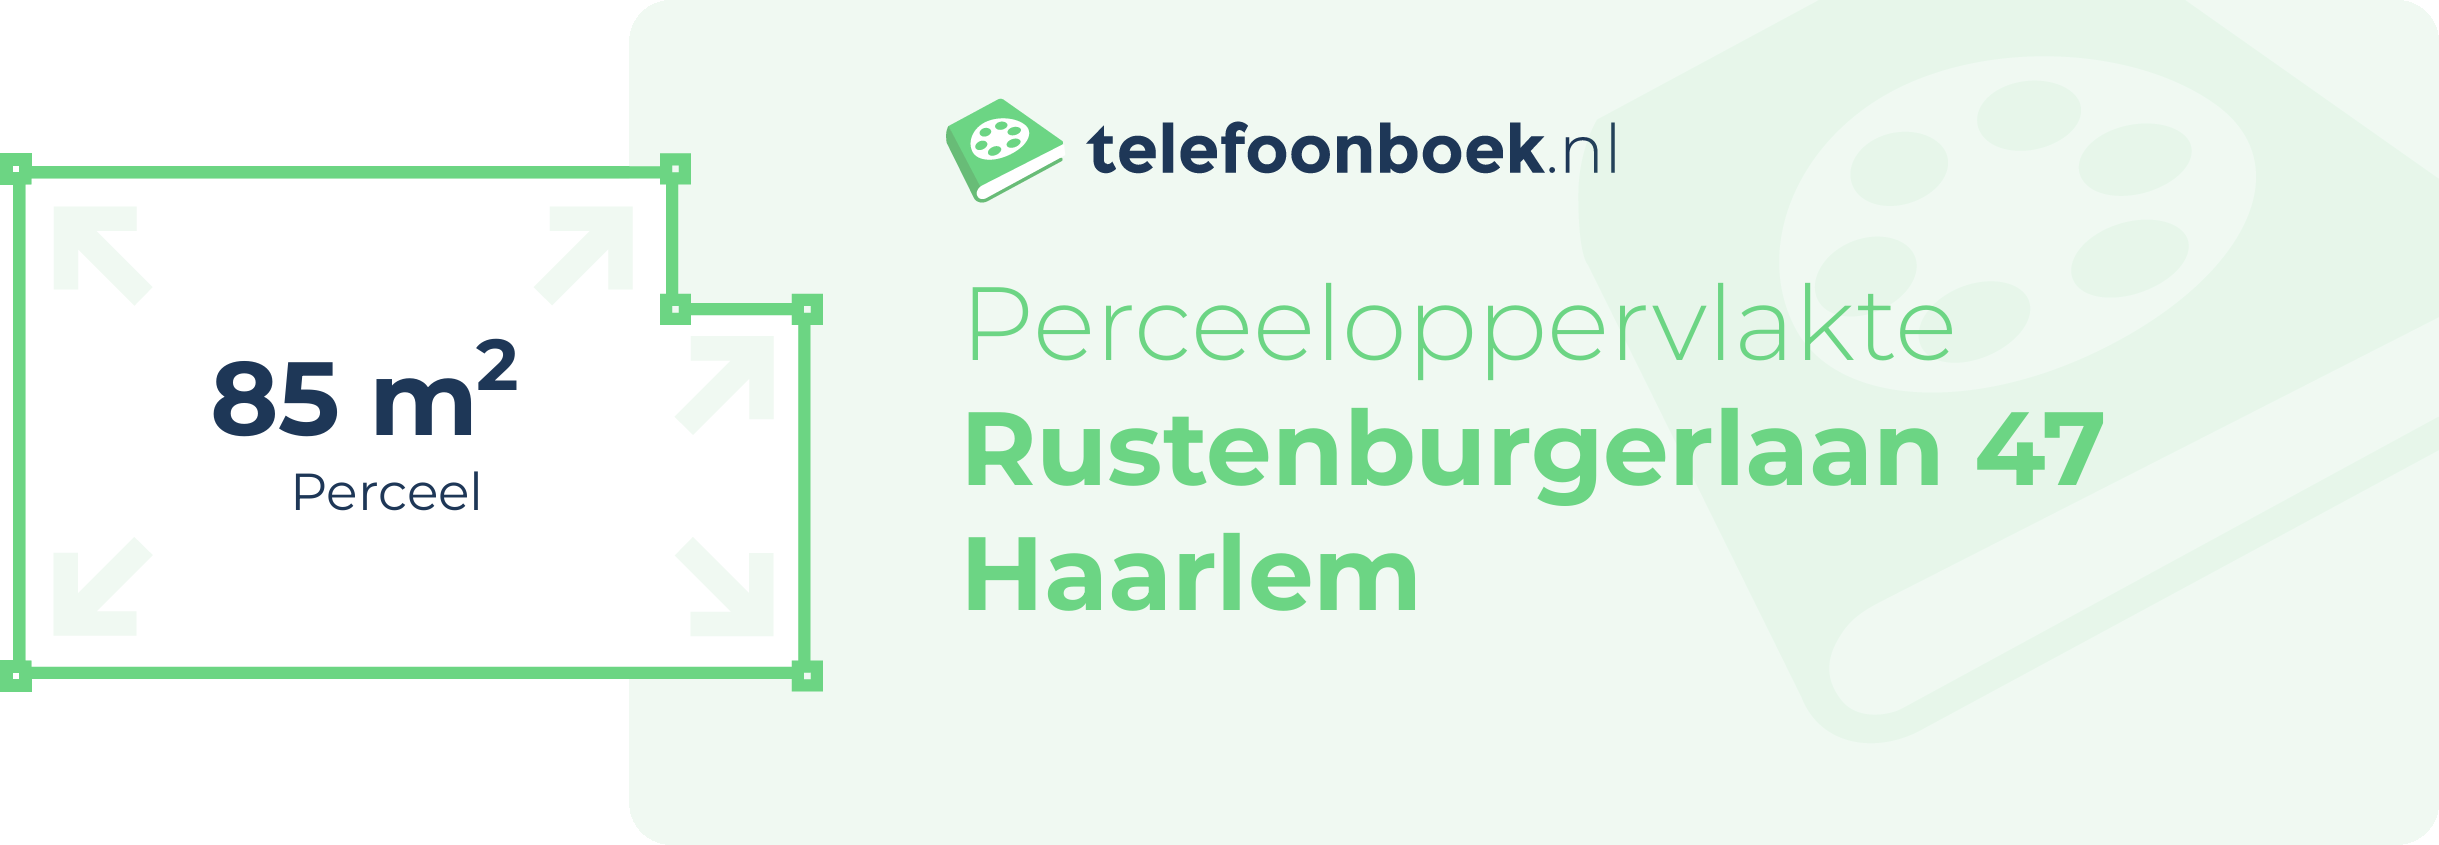 Perceeloppervlakte Rustenburgerlaan 47 Haarlem